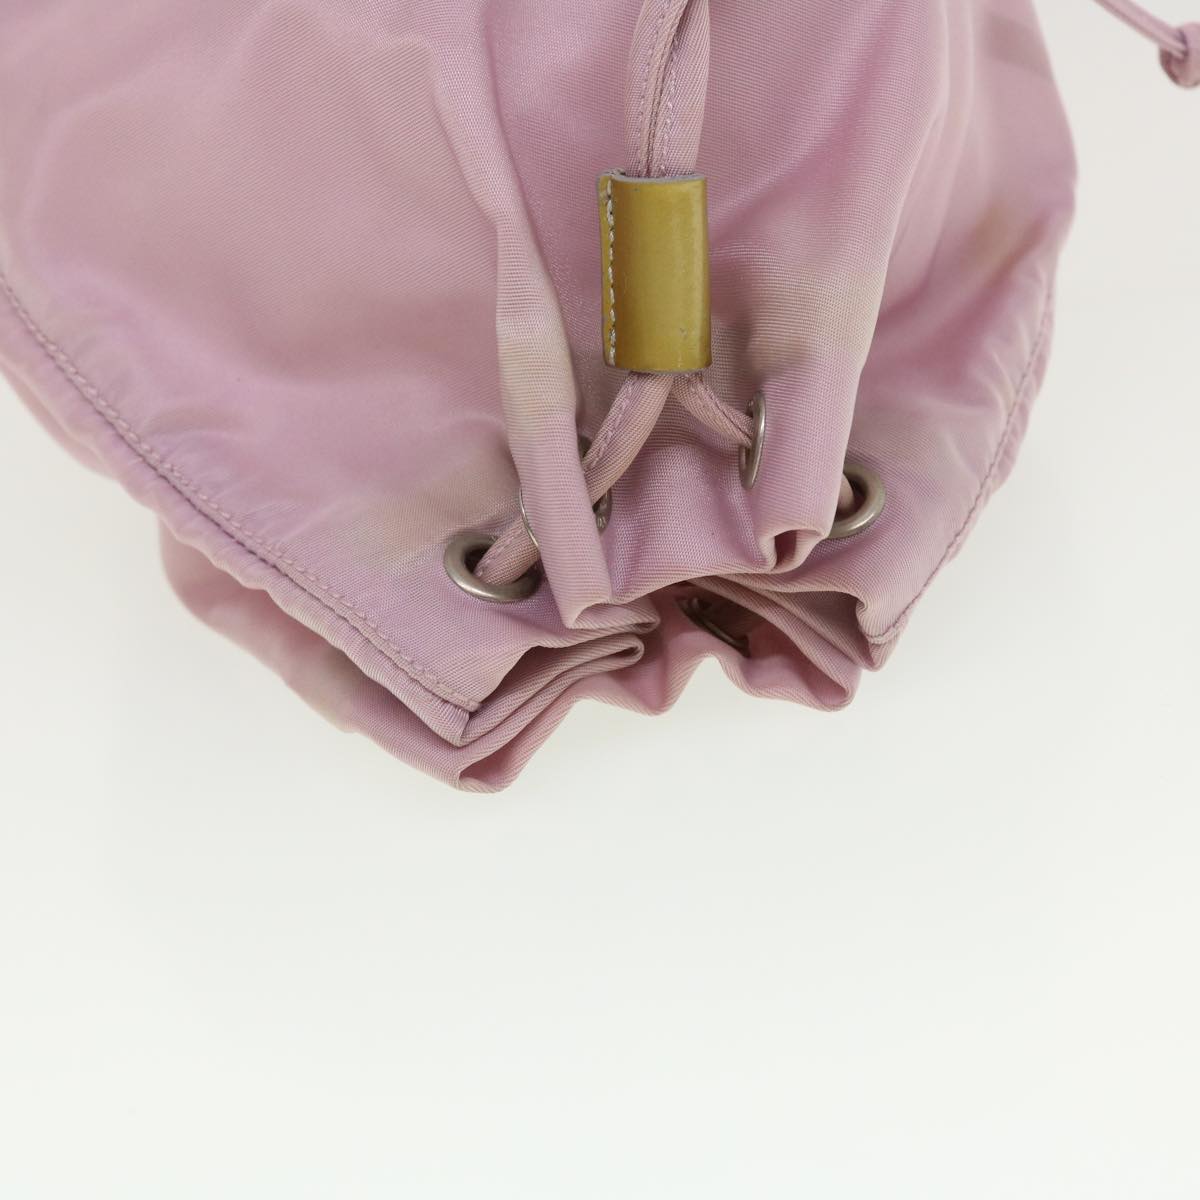 PRADA Drawstring Bag Pouch Nylon Pink Auth yk7134